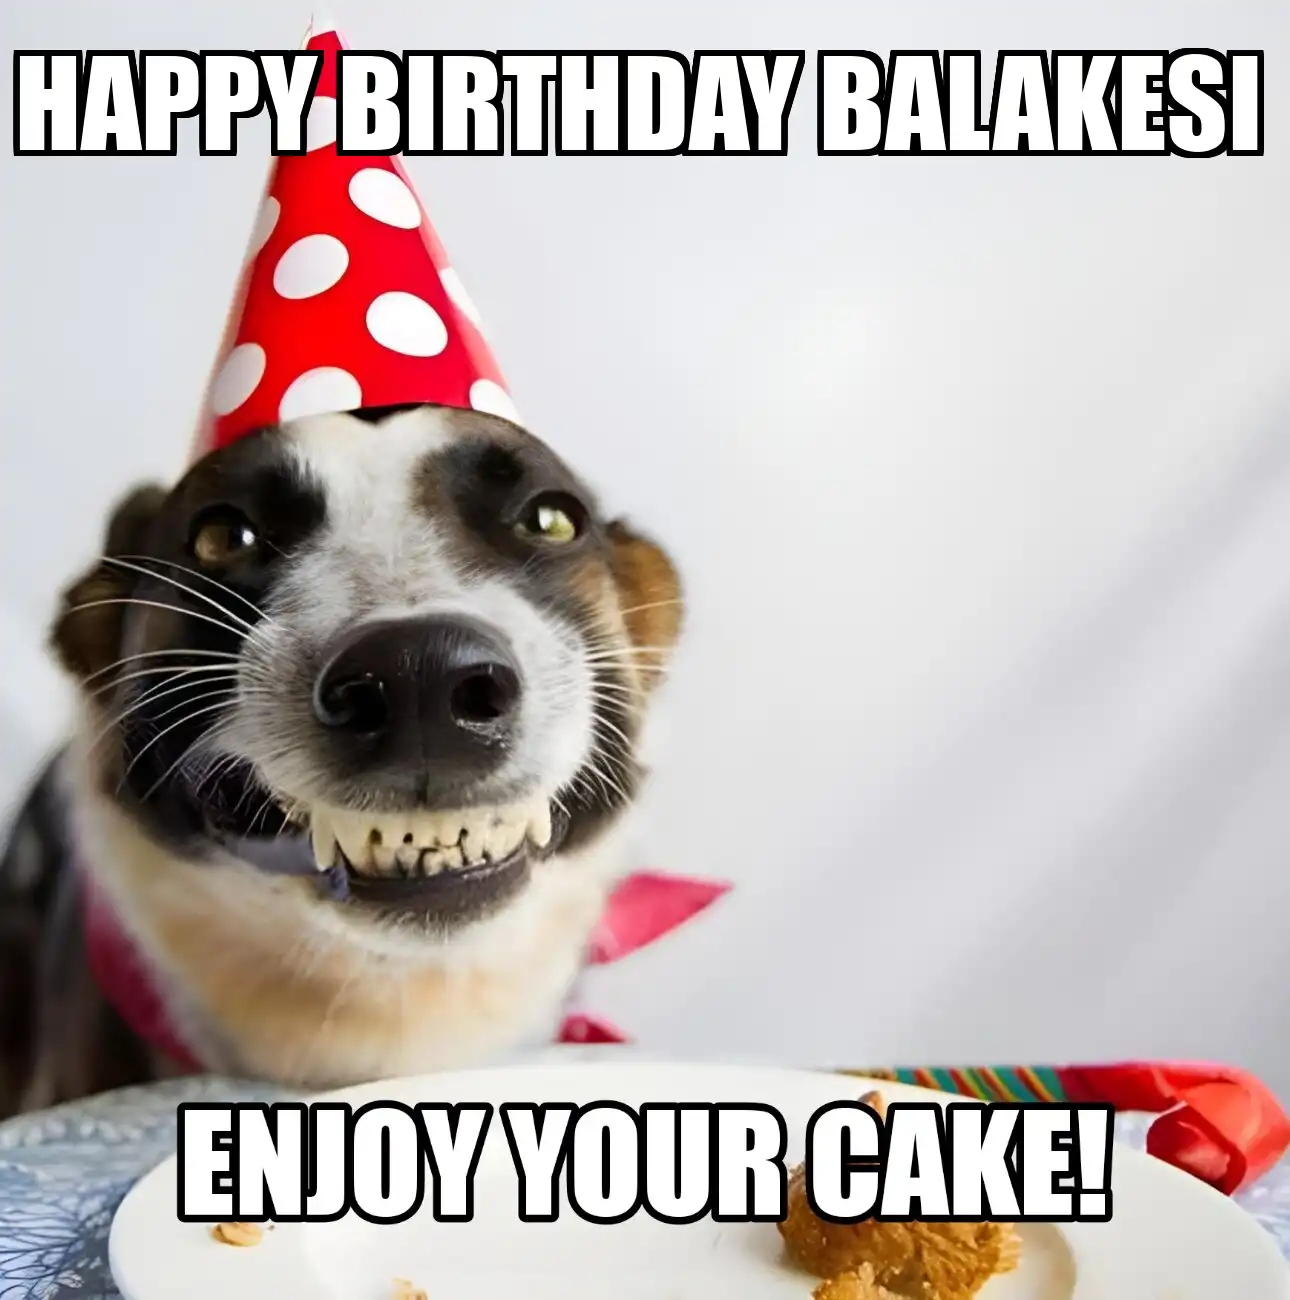 Happy Birthday Balakesi Enjoy Your Cake Dog Meme